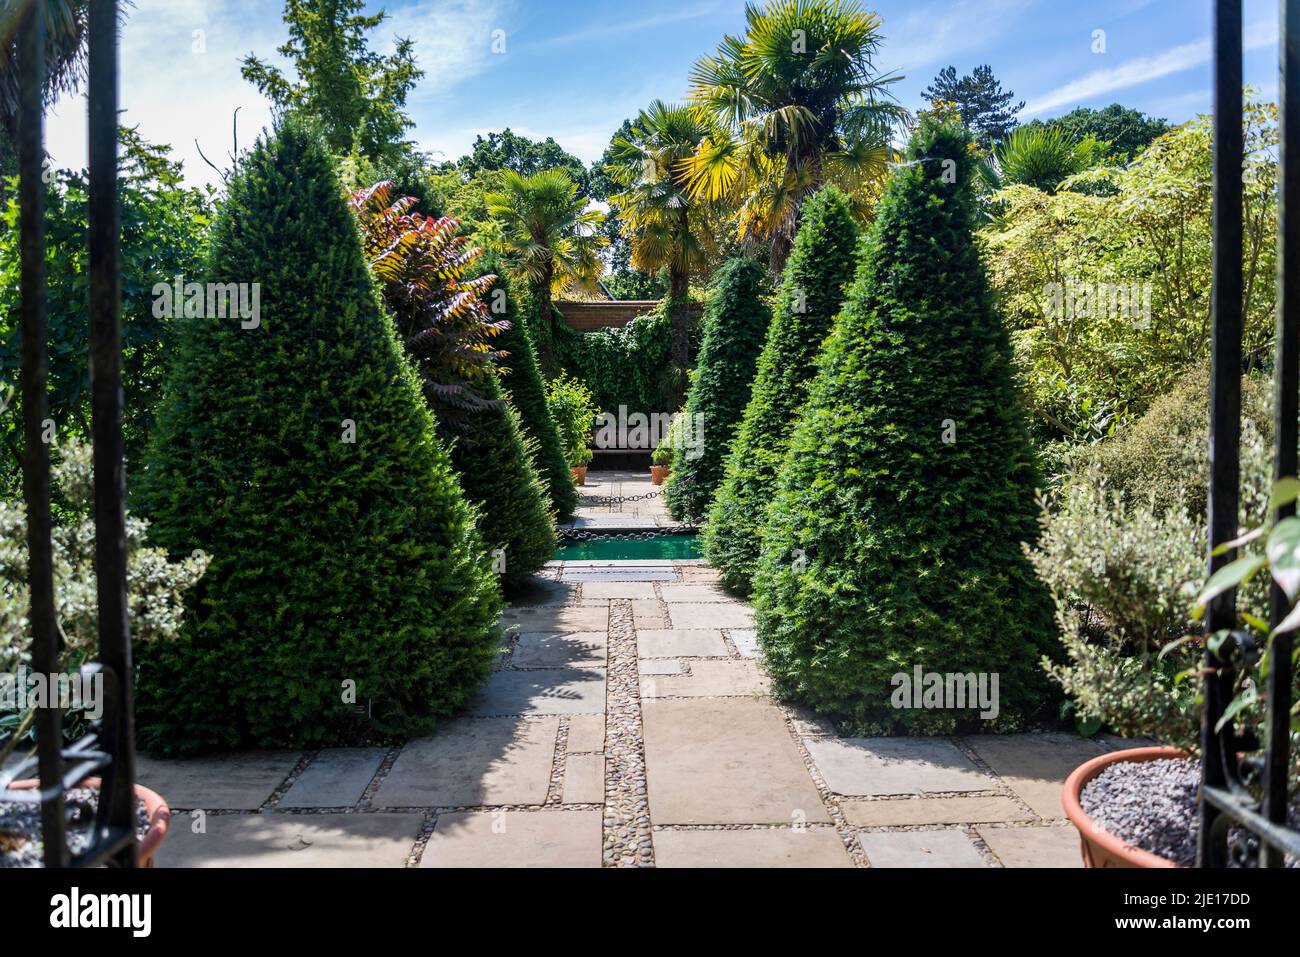 Jardin formel avec arbres topiaires, RHS Wisley Garden, Surrey, Angleterre, Royaume-Uni Banque D'Images